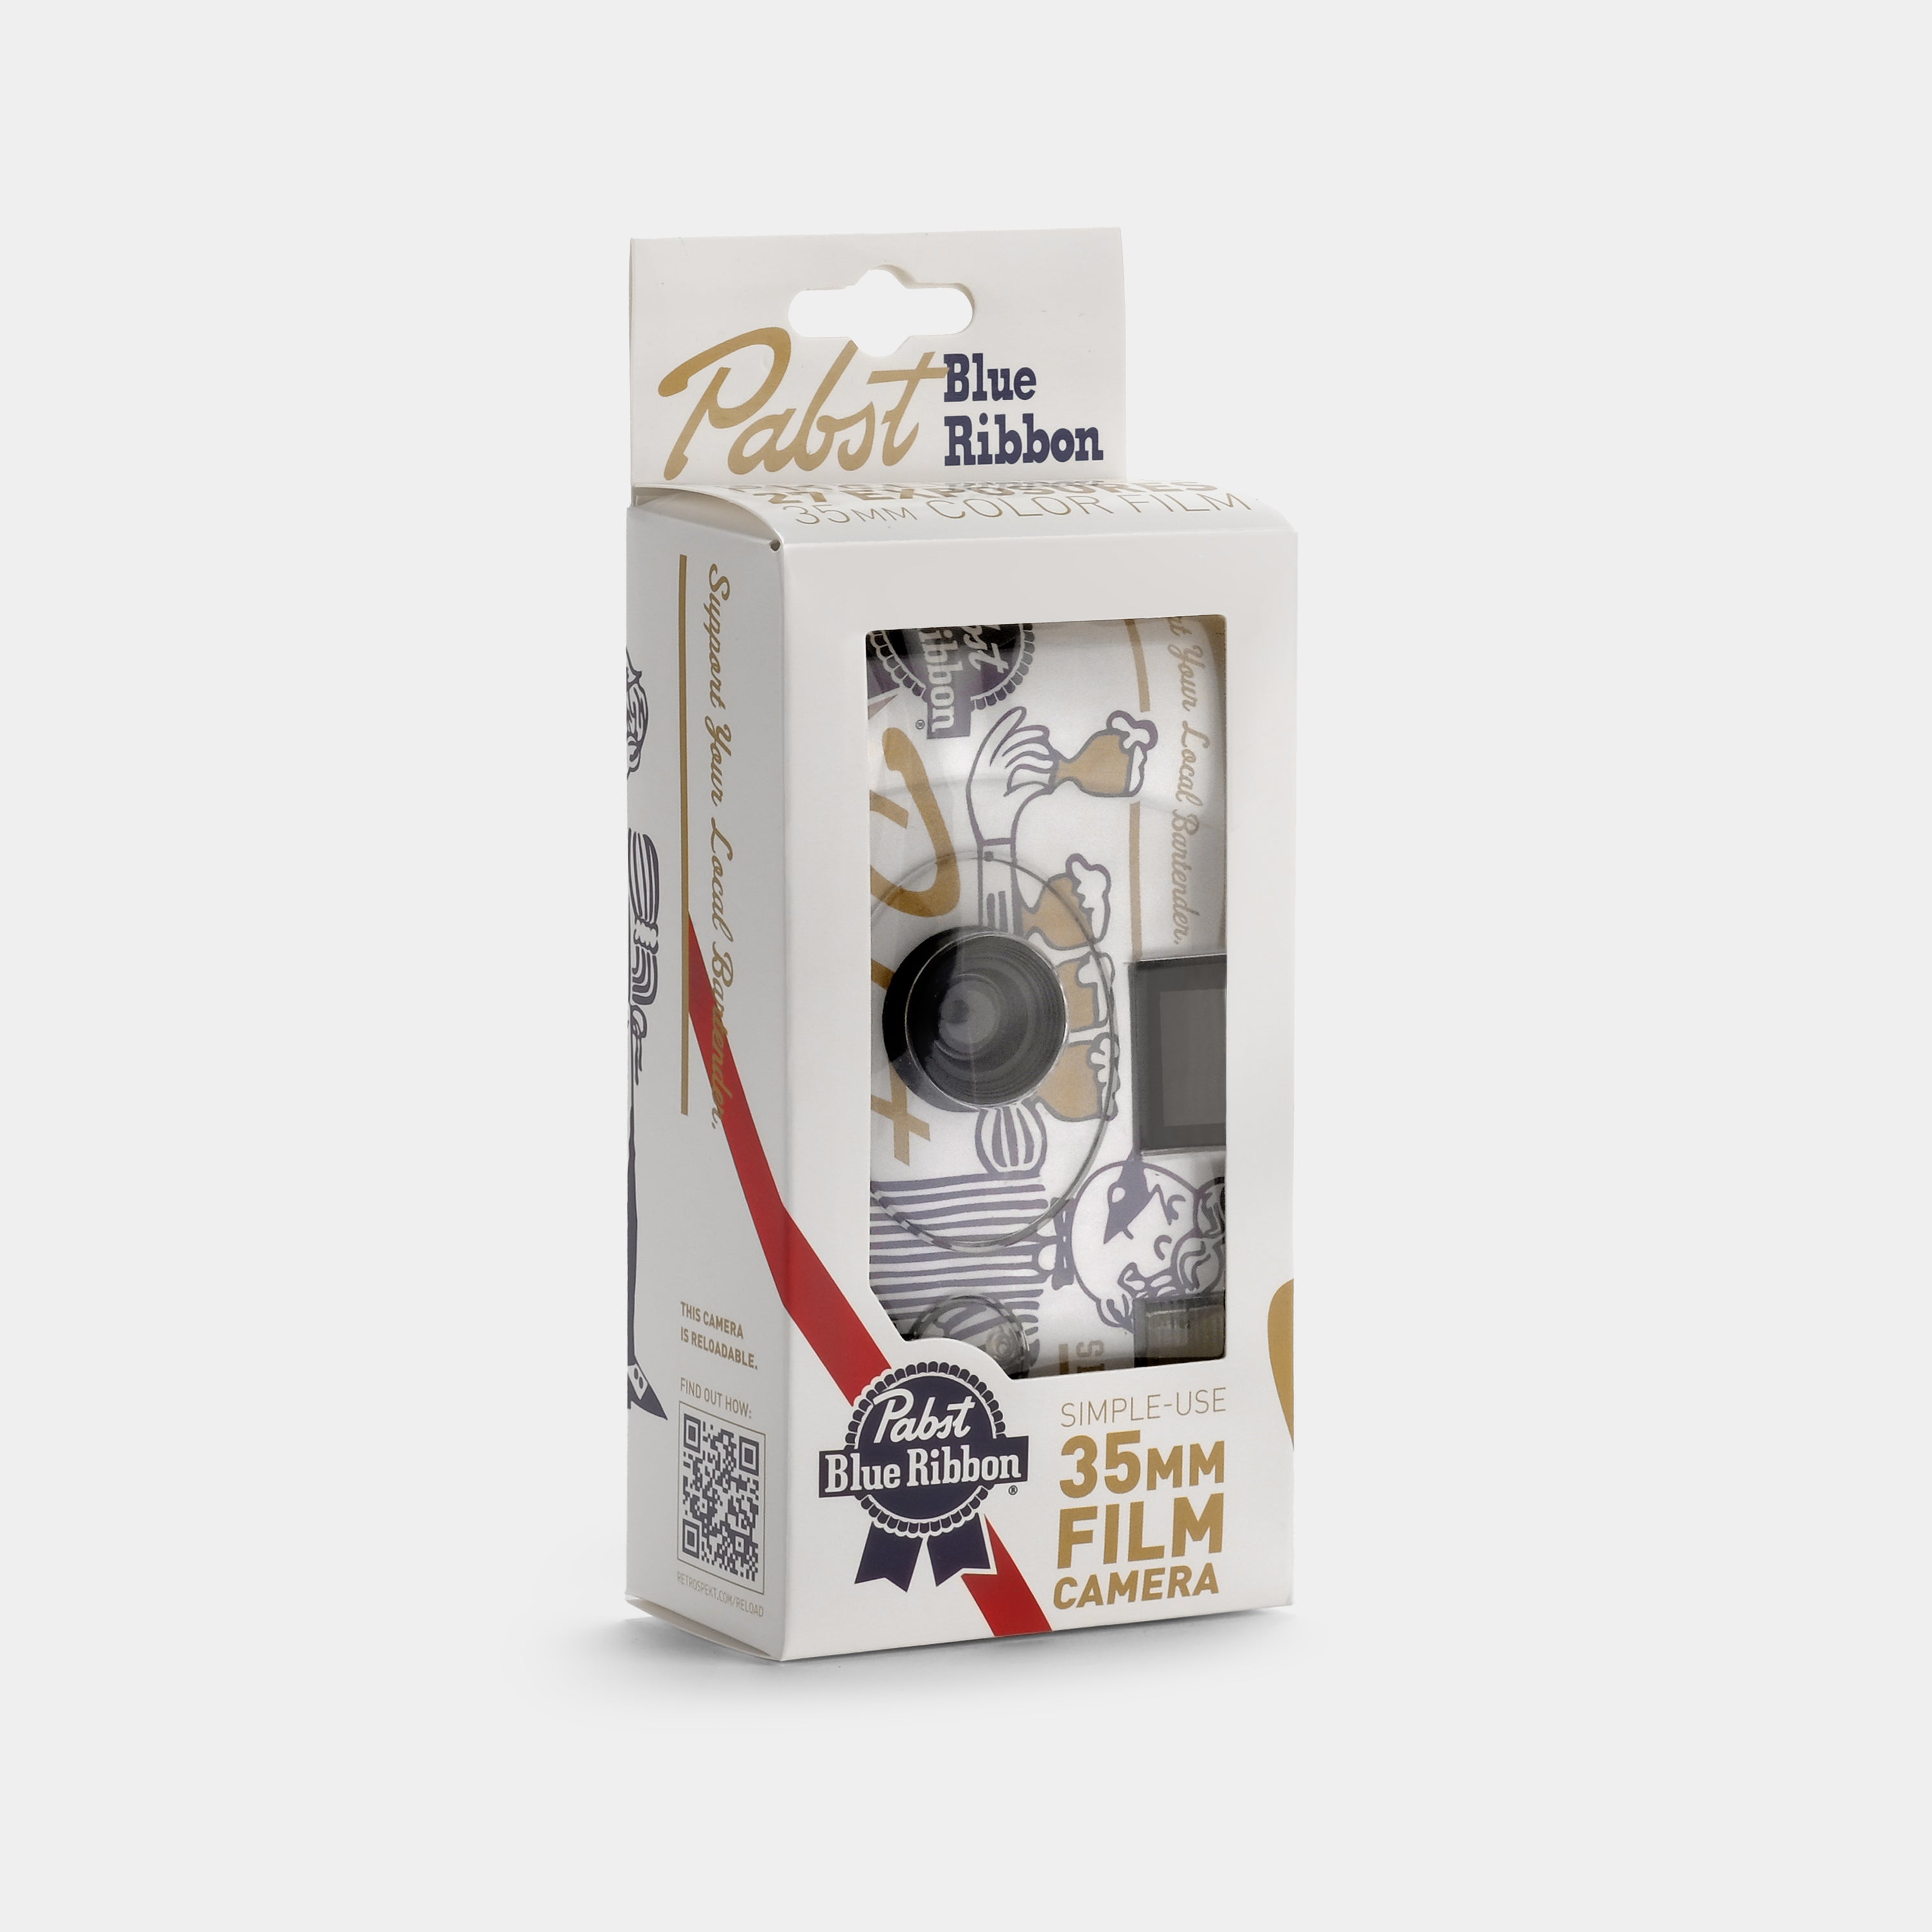 Pabst Blue Ribbon Simple-Use 35mm Film Camera